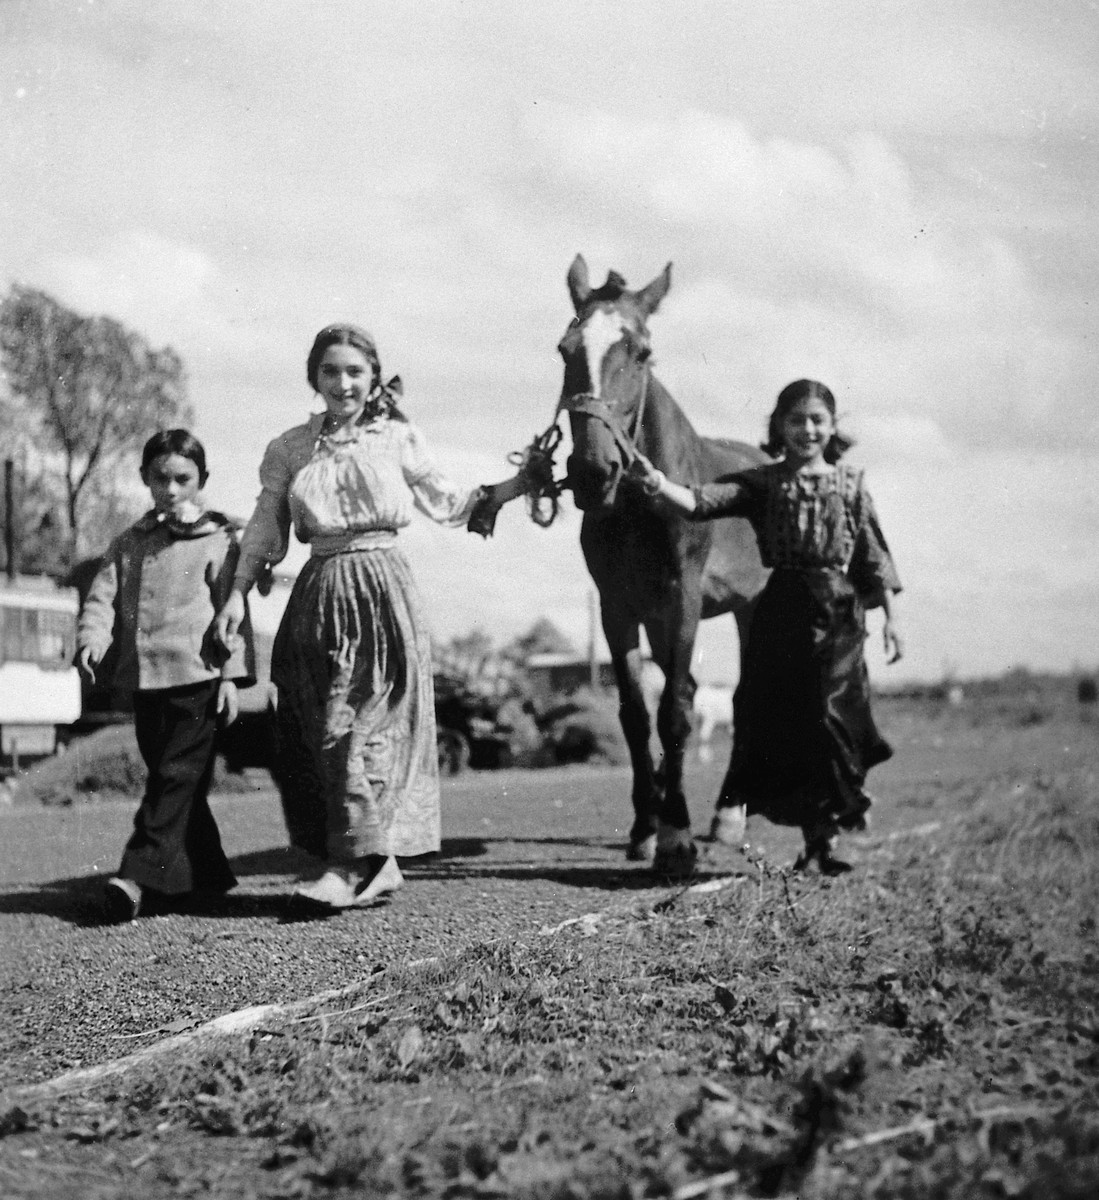 Romani youths lead a horse along a road.